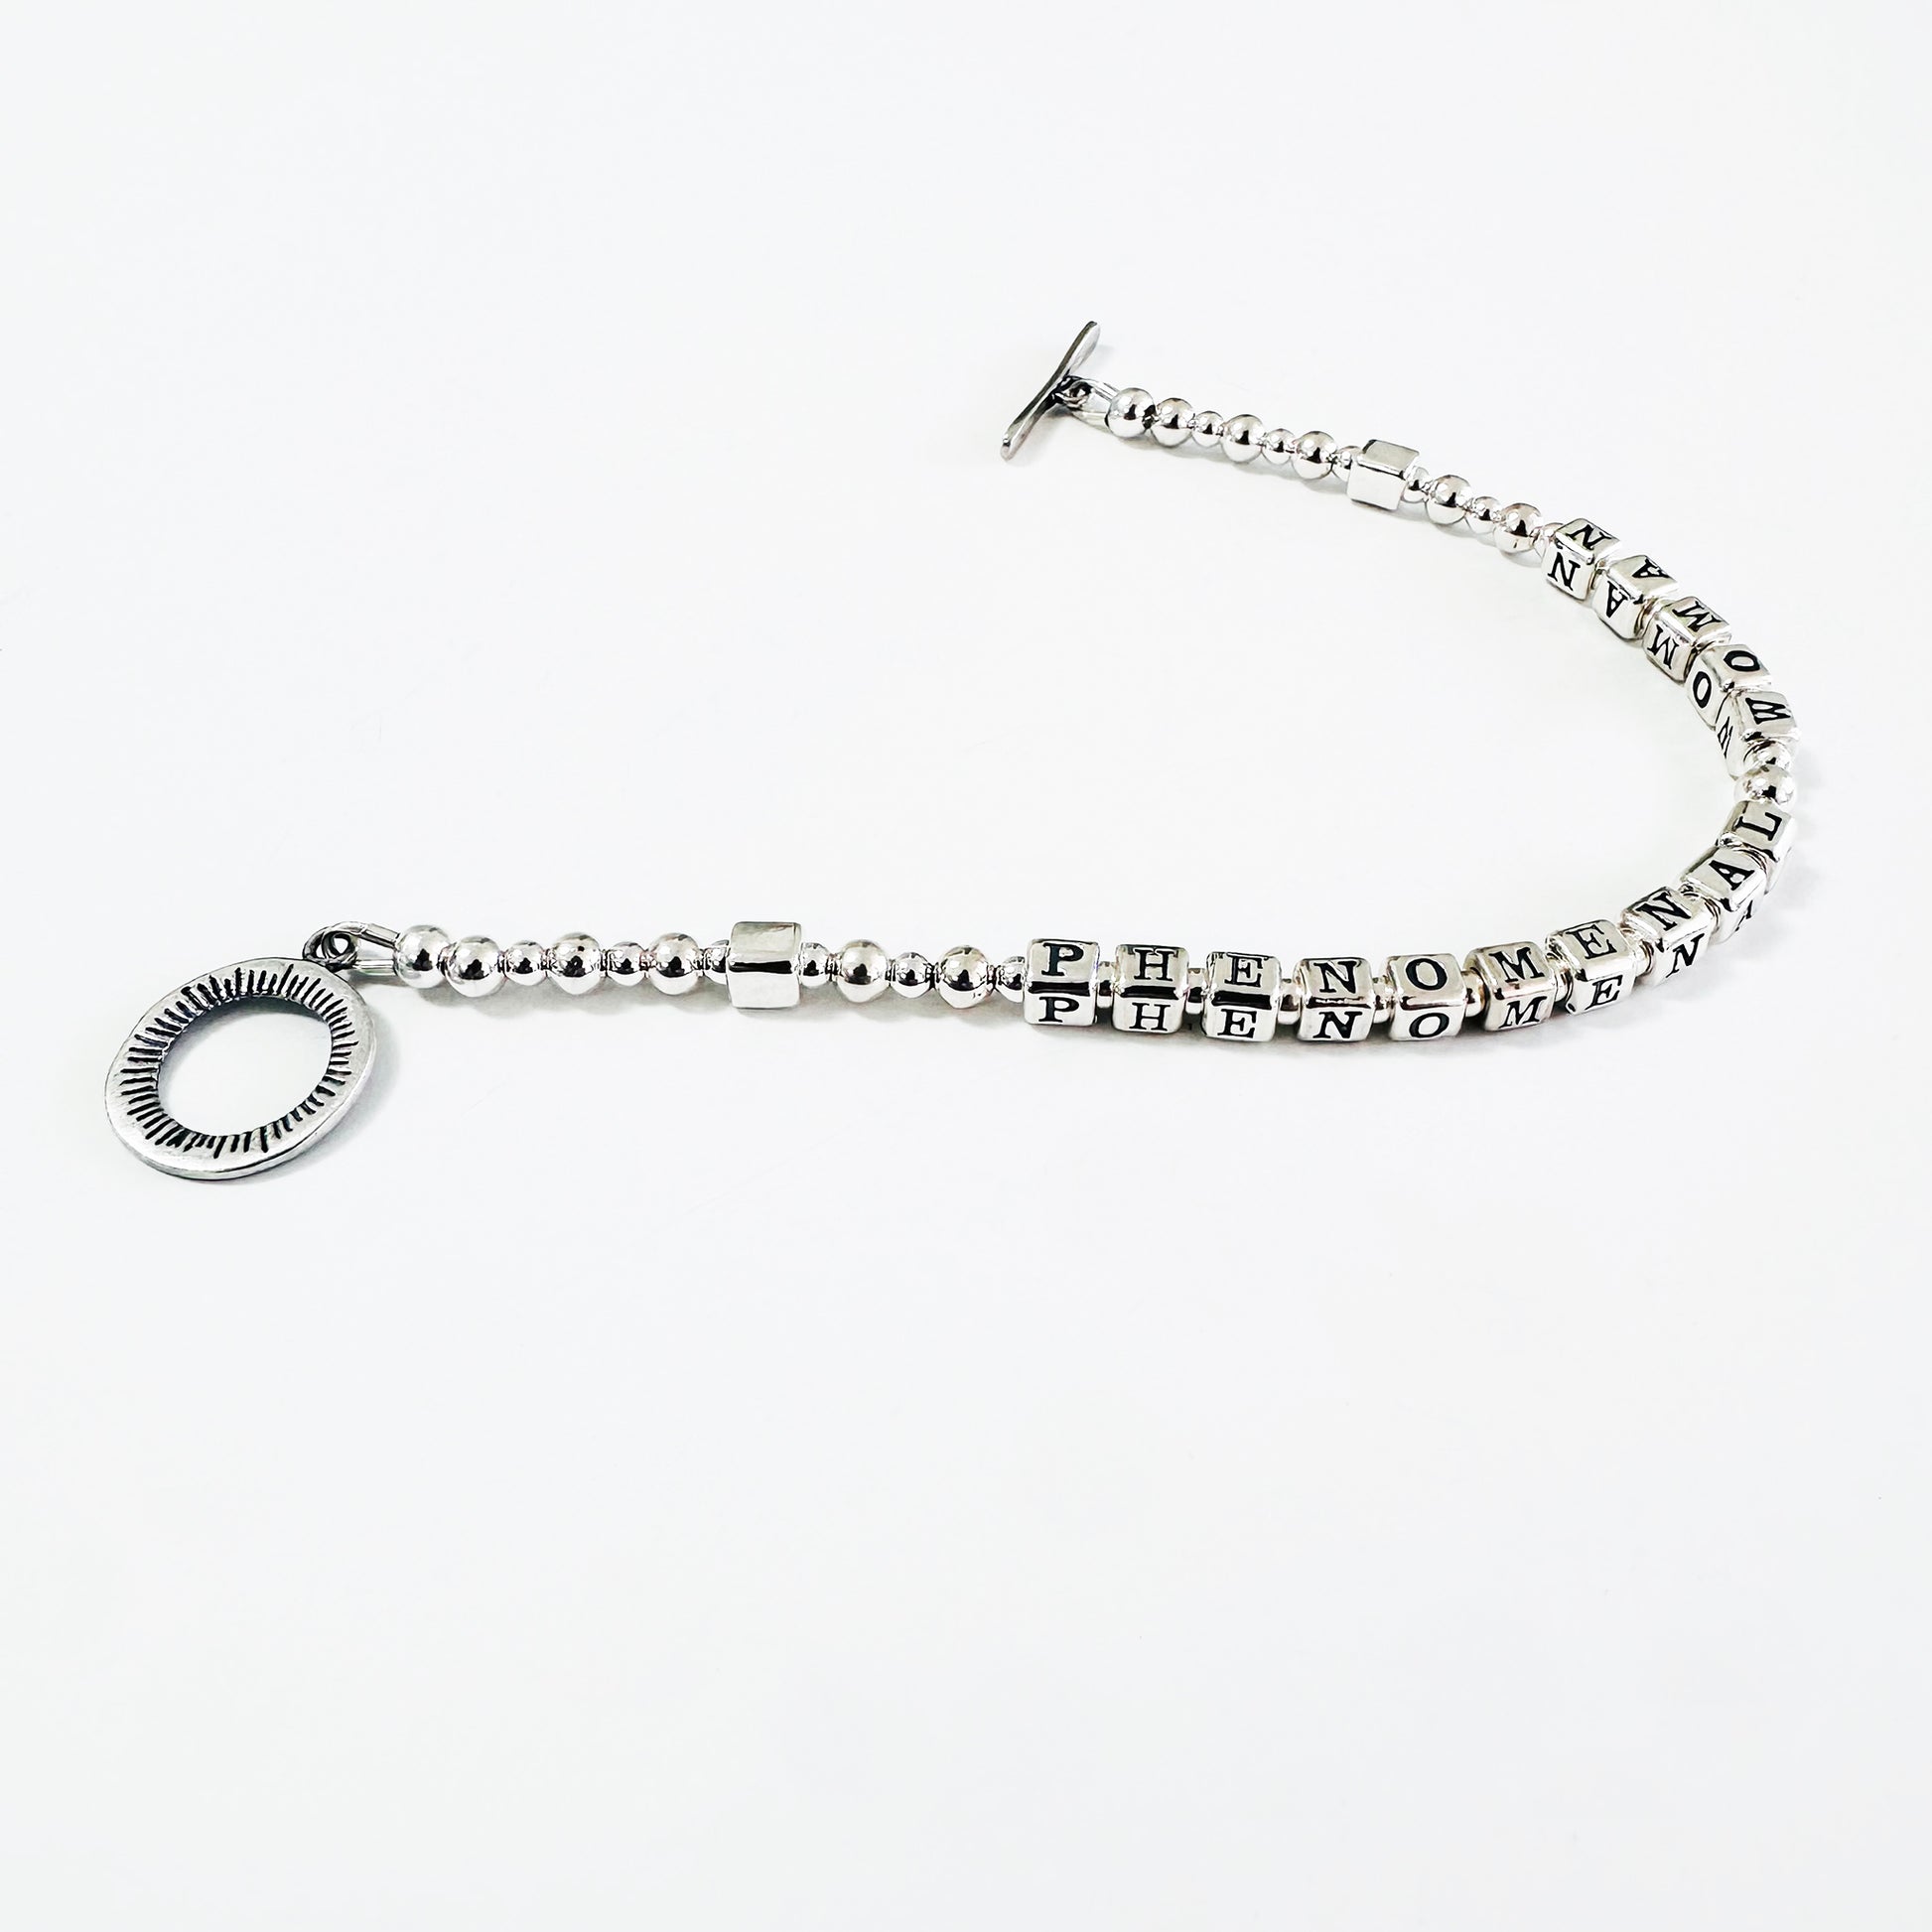 Phenomenal Woman by Maya Angelou sterling silver bracelet by Higher Calling Bracelets